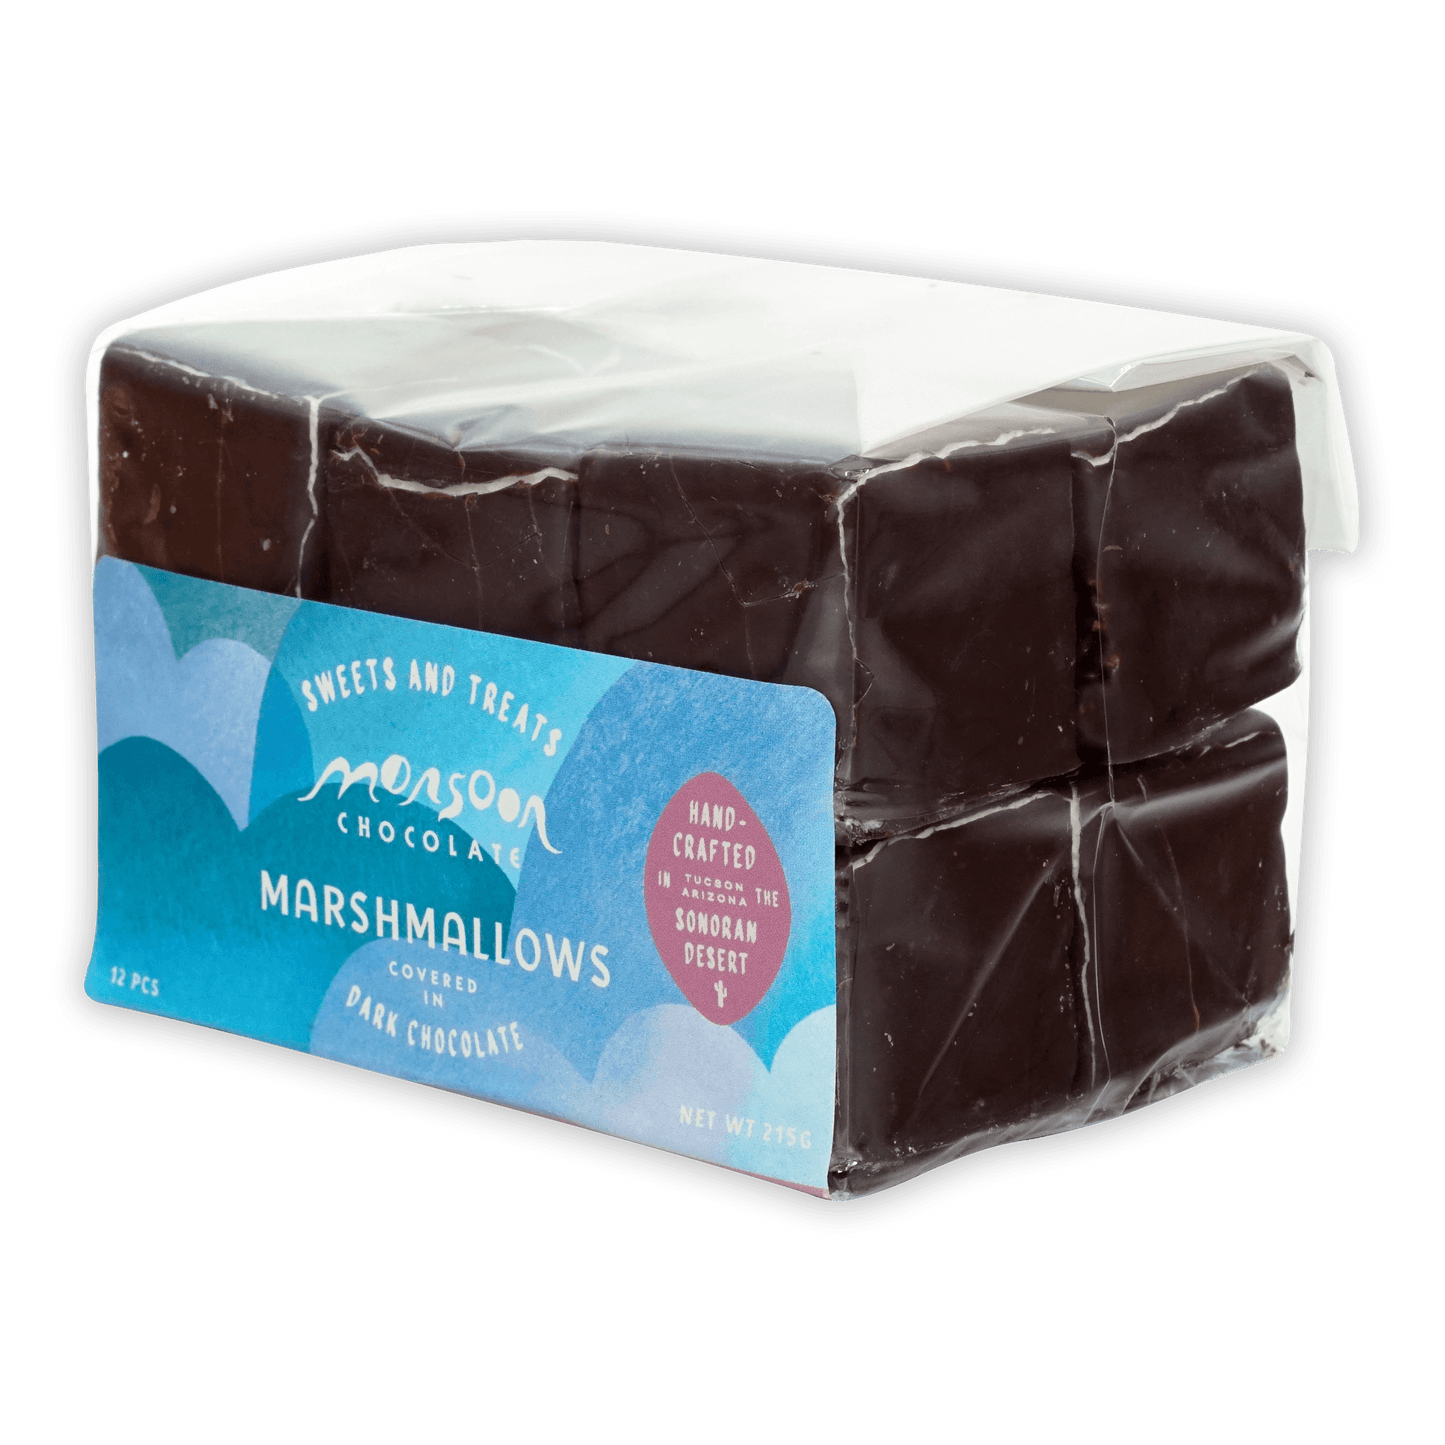 Monsoon Dark Chocolate Covered Marshmallows